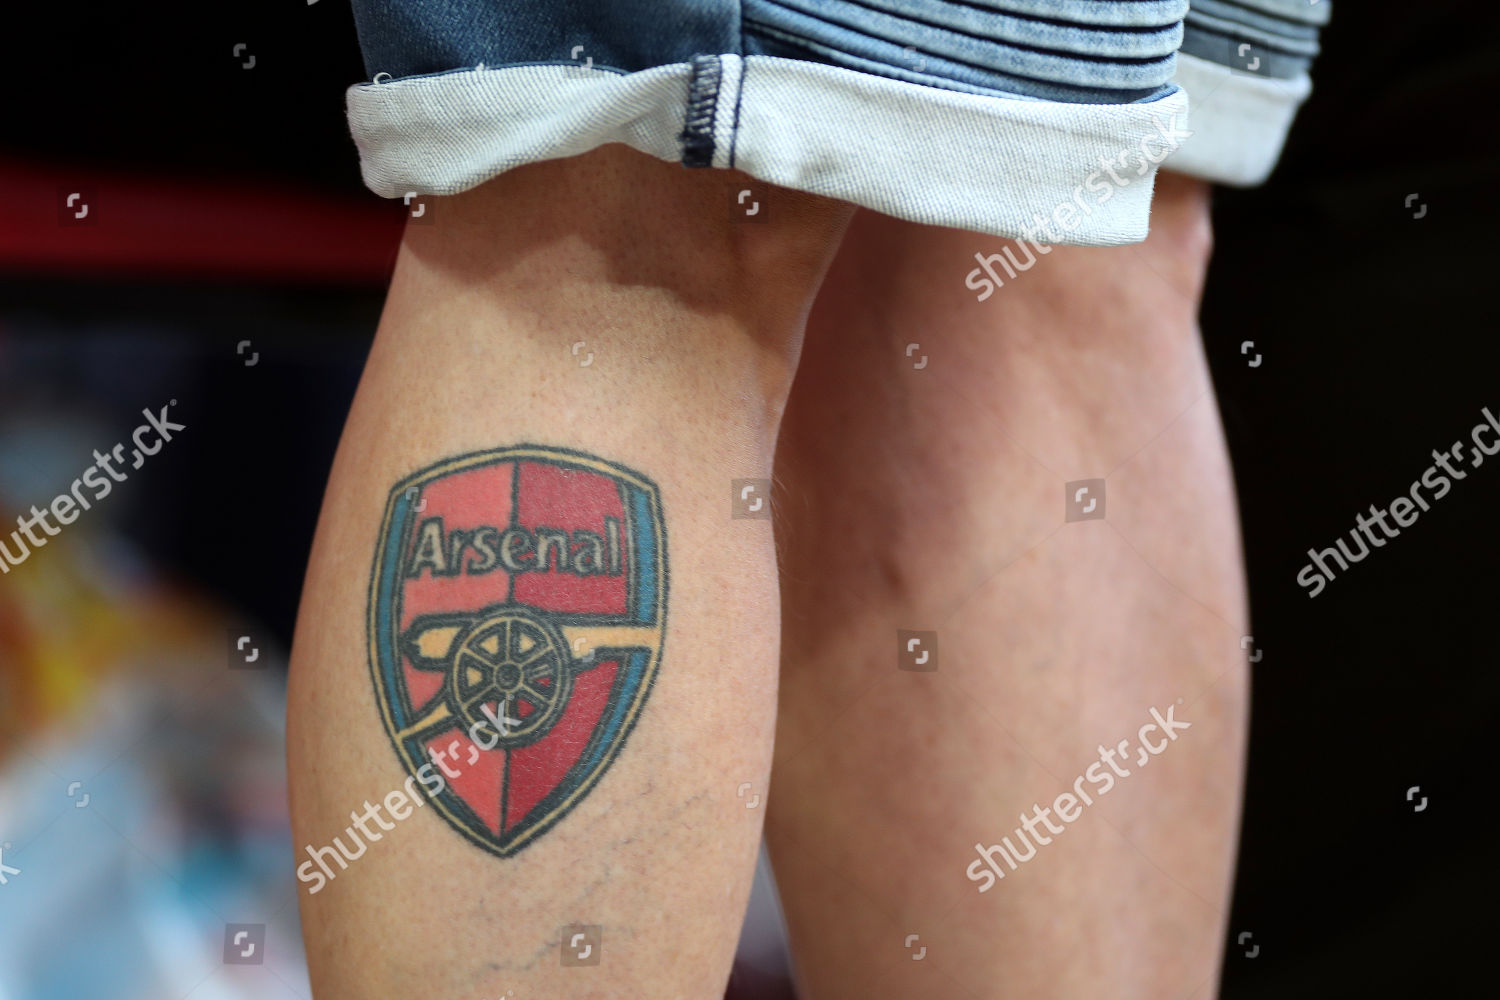 Arsenal Fan Tattoo Arsenal Badge On Editorial Stock Photo - Stock Image |  Shutterstock